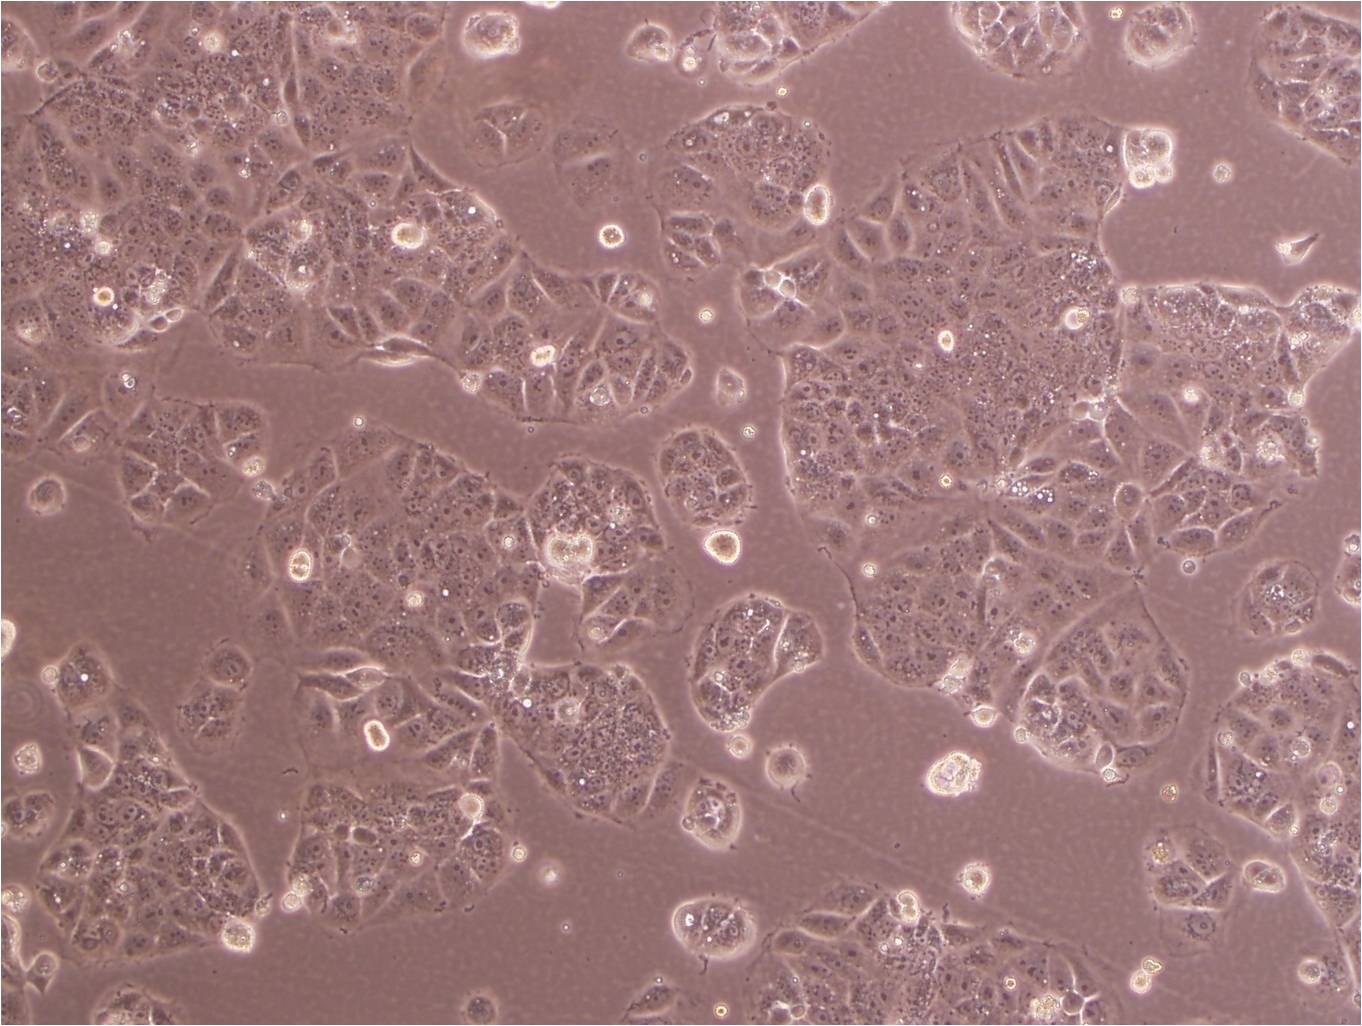 HHL-5 epithelioid cells人胚胎肝细胞系,HHL-5 epithelioid cells